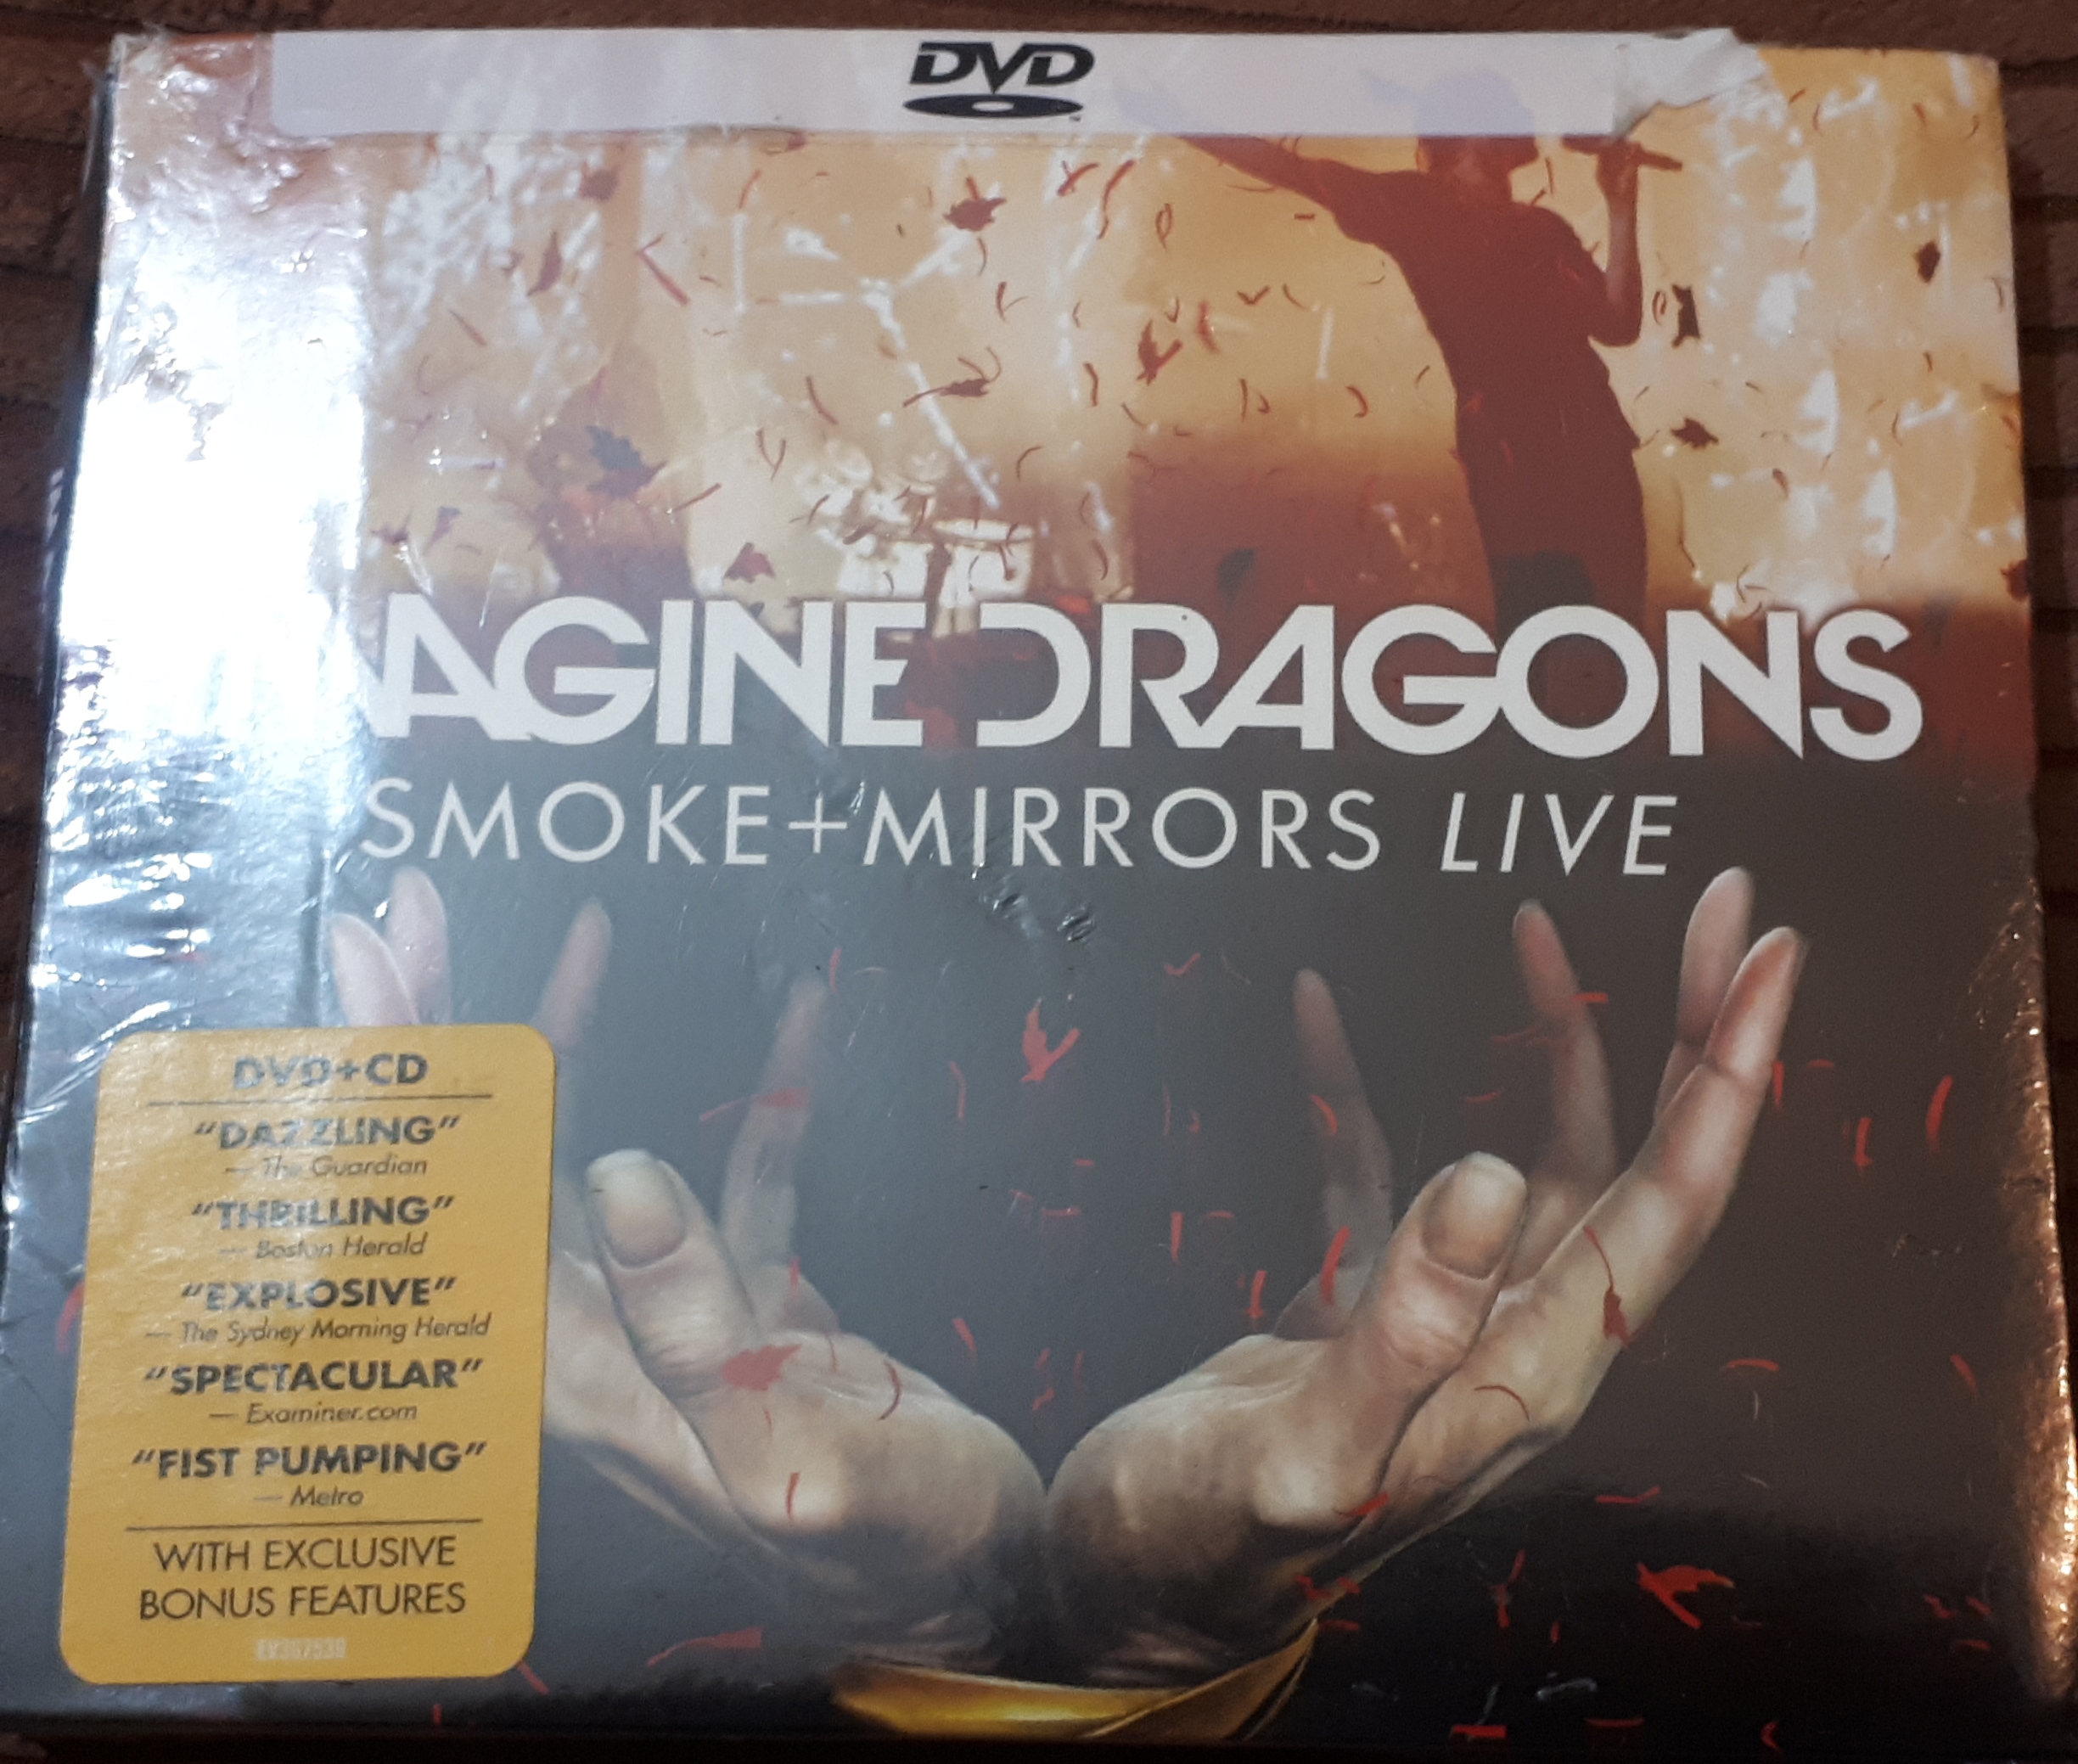 Imagine Dragons - Smoke + mirrors live